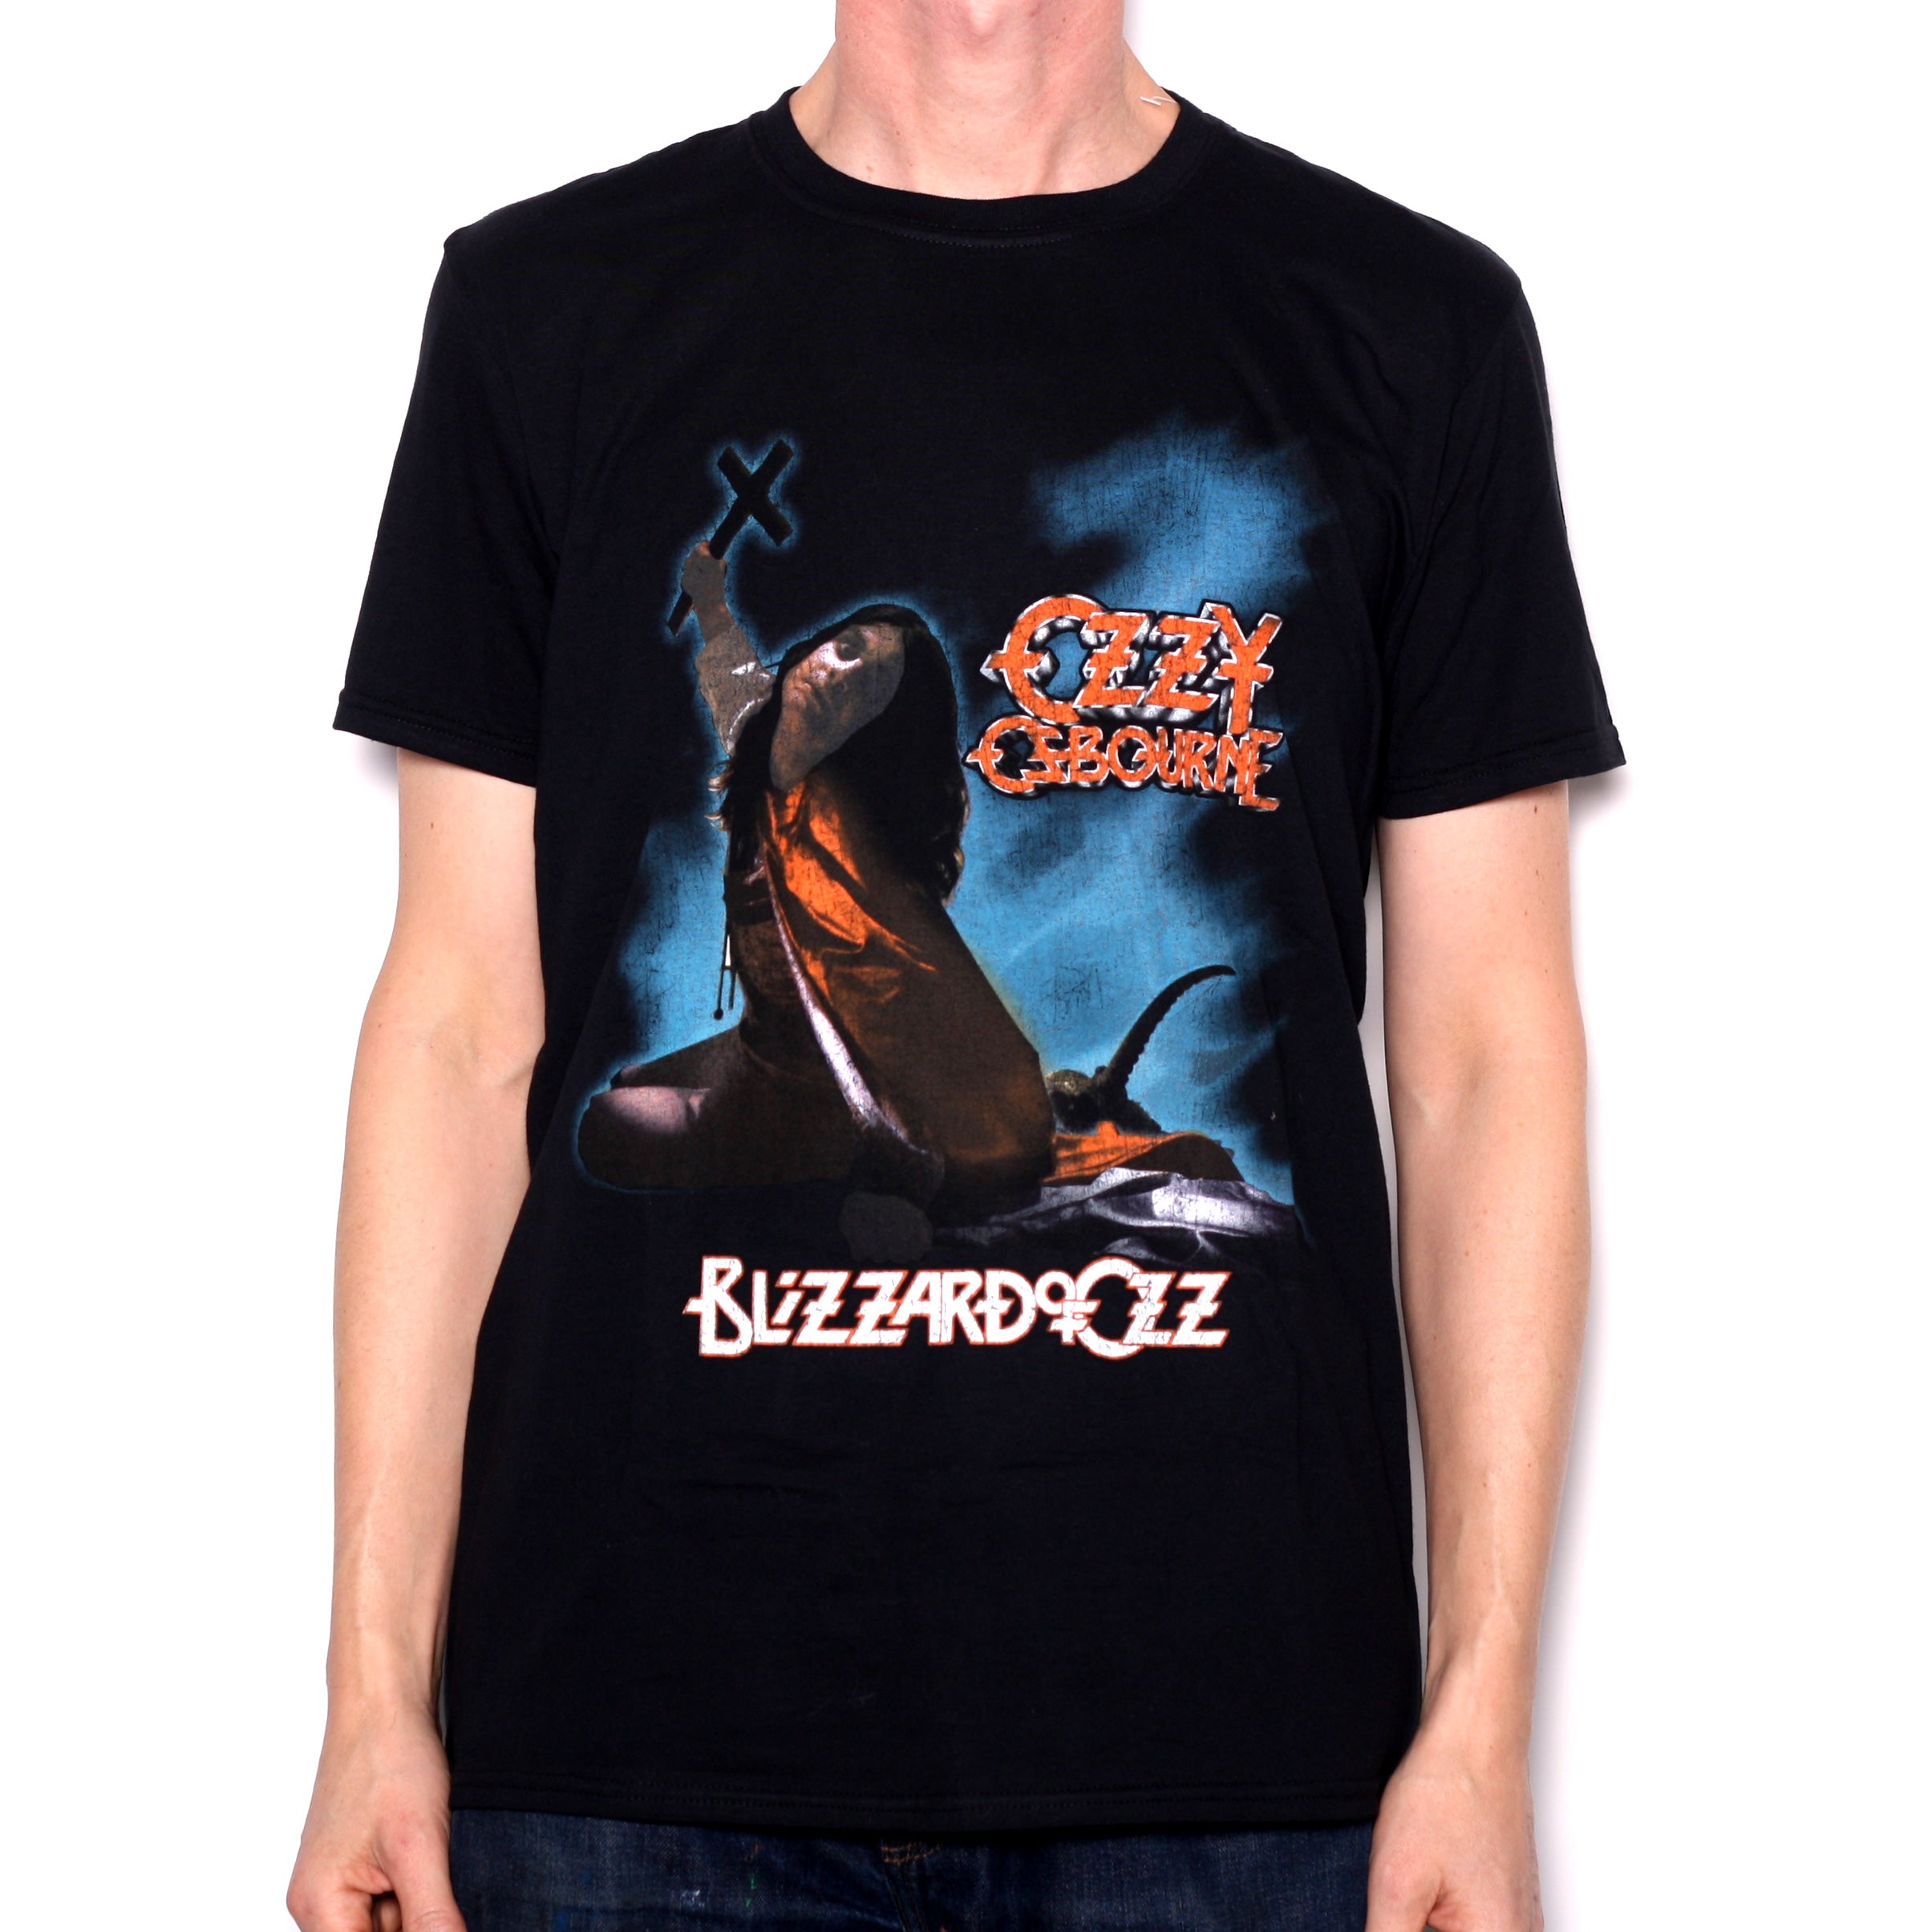 Ozzy Osborne T Shirt - Blizzard Of Oz 100% Official